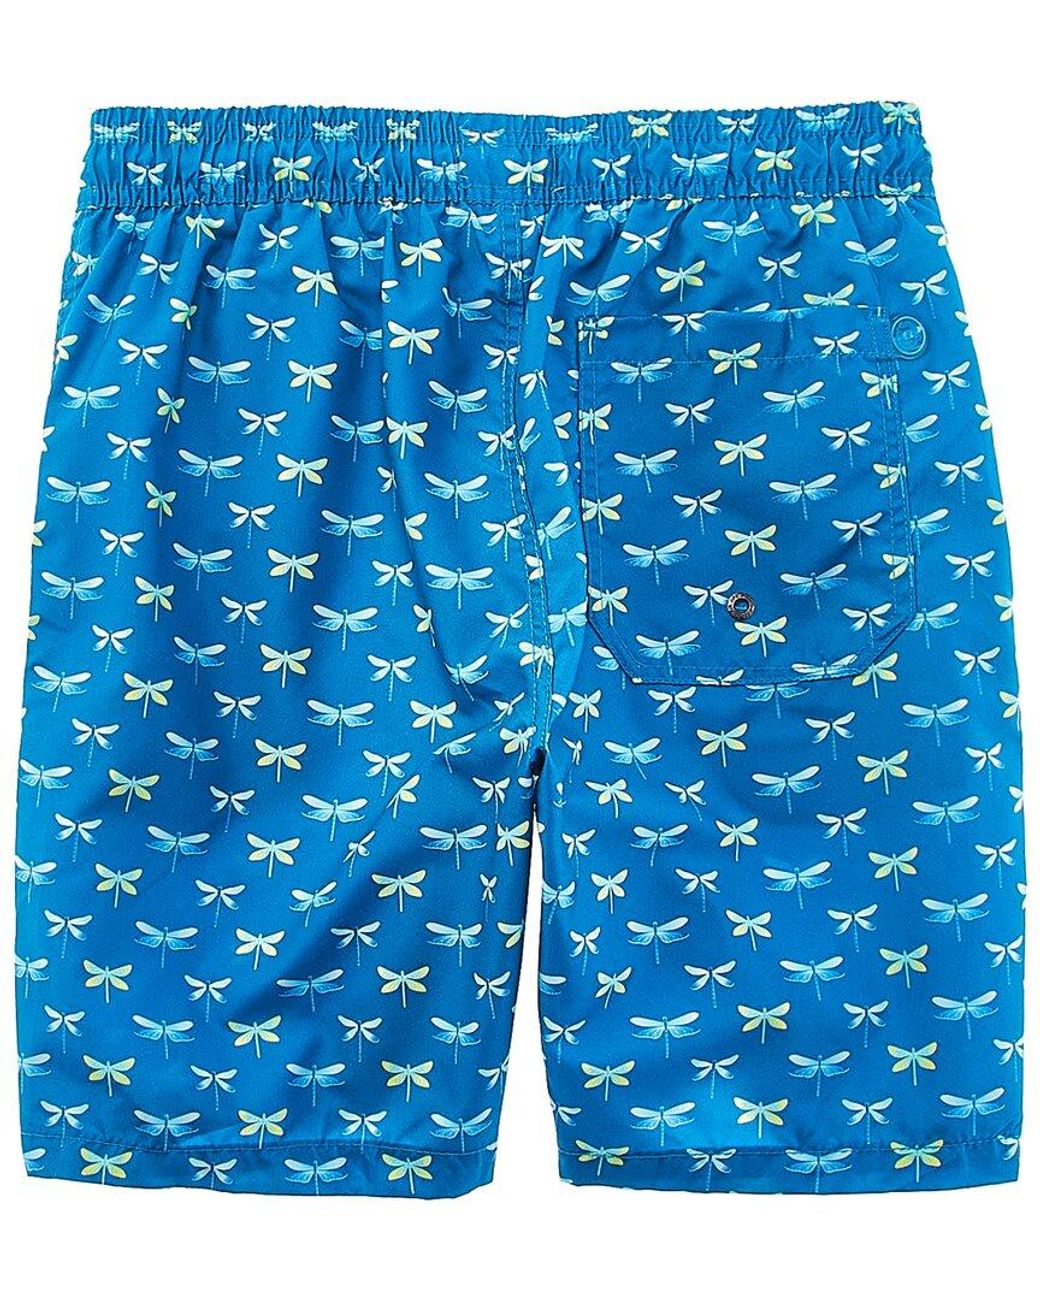 Mr Swim NY Solid Blue 7.5" swim trunk shorts  NWT mr-301-1 Small 